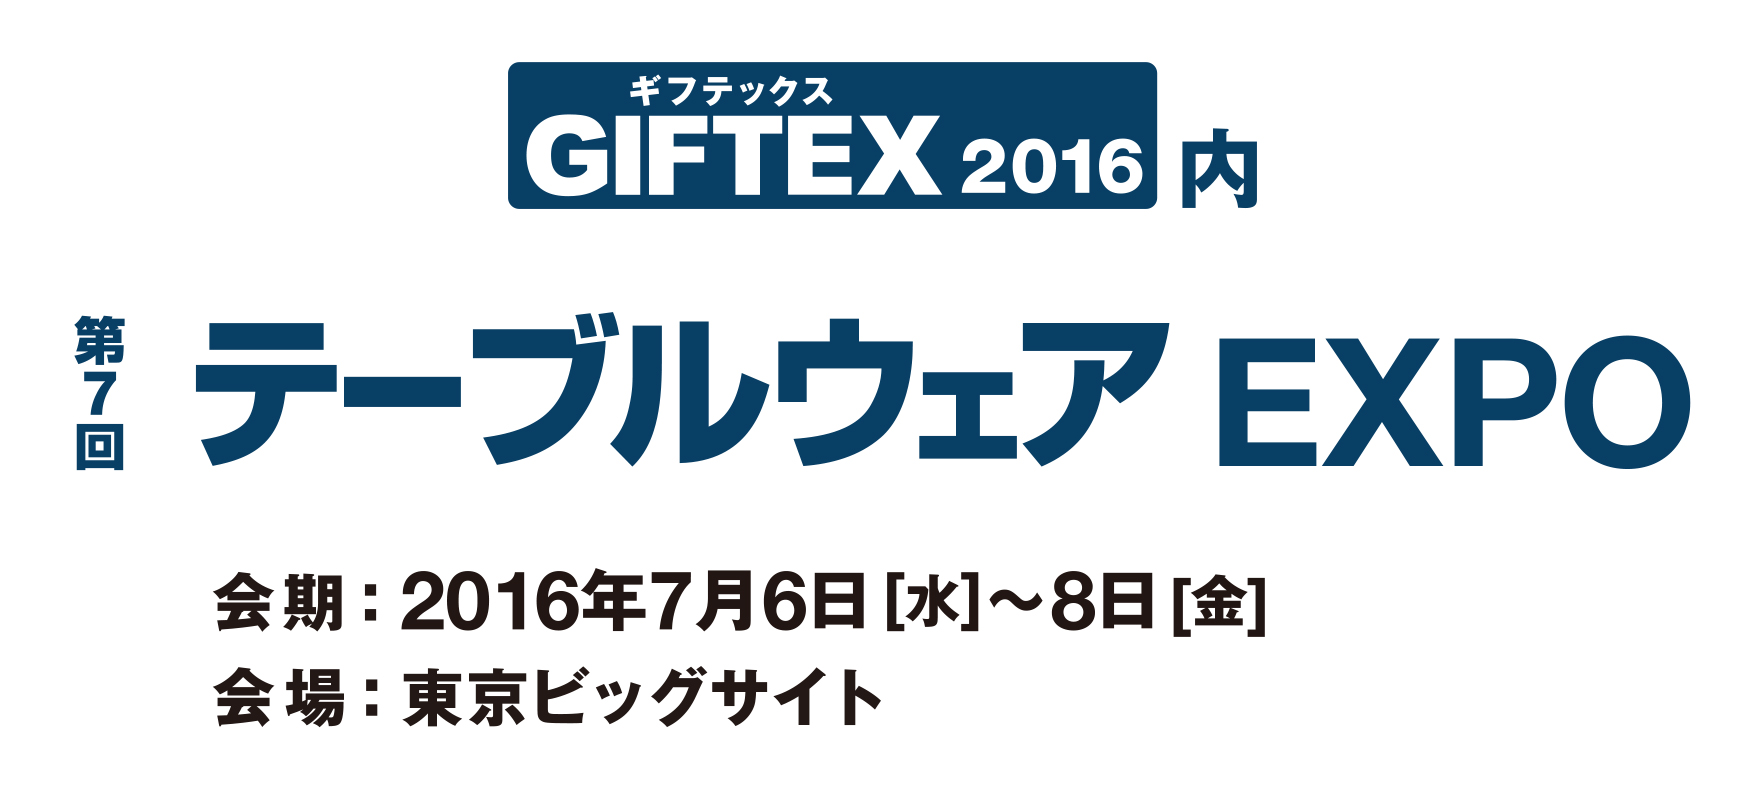 GIFTEX2016